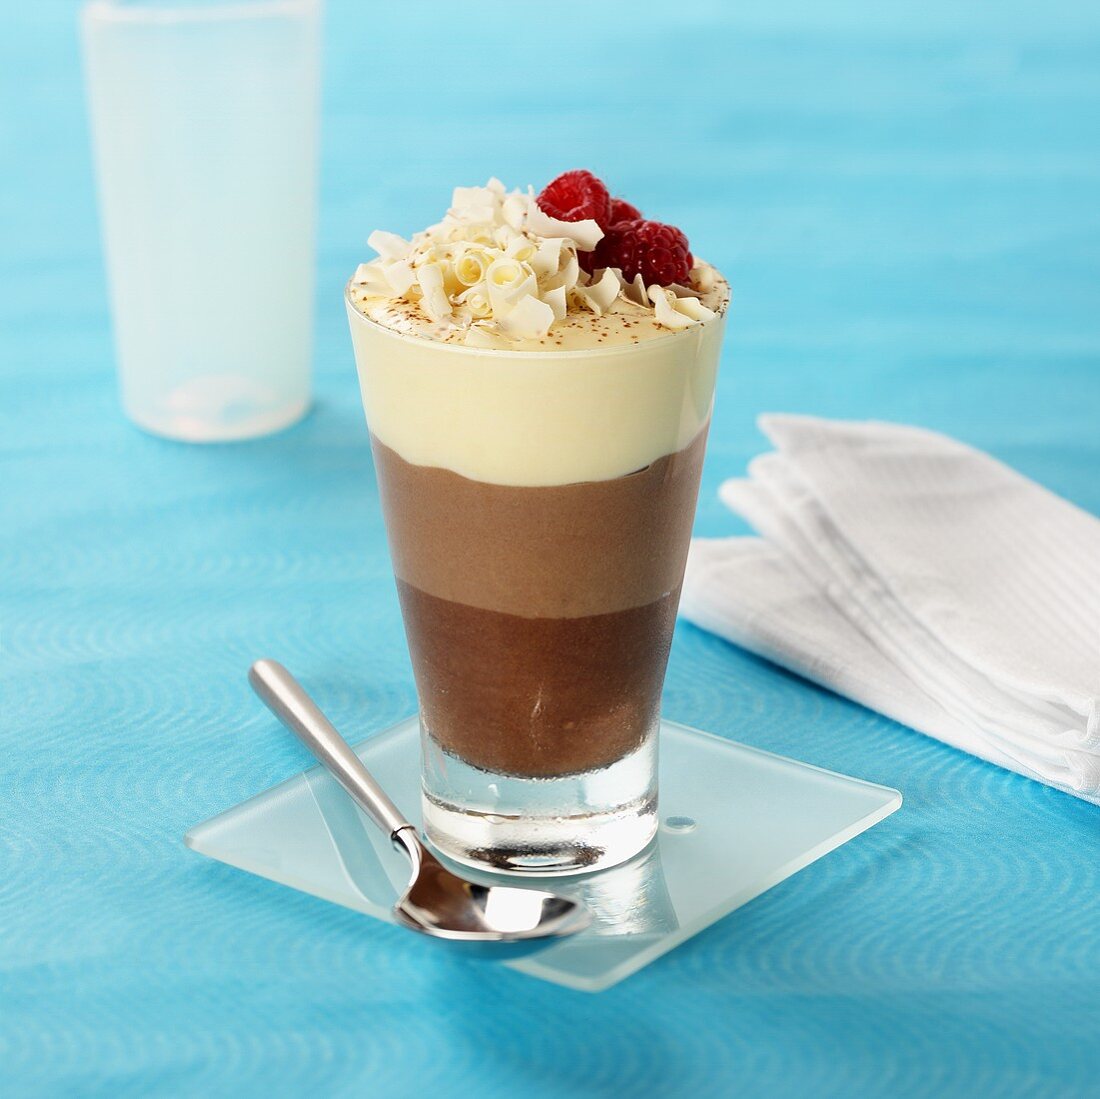 Chocolate cream in three layers